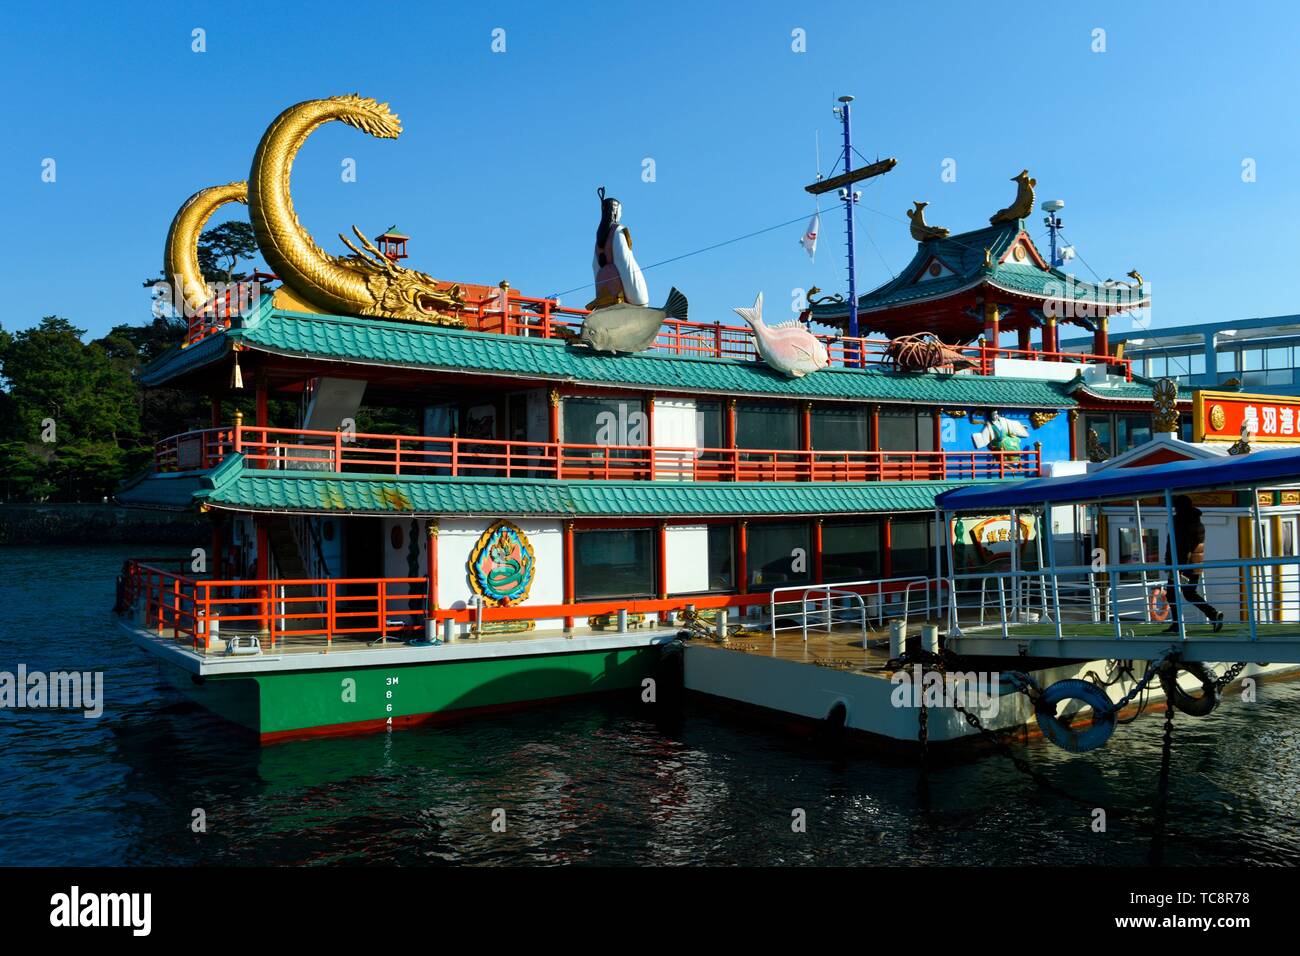 Toba Bay Cruise ship, Toba, Mie Prefecture, Japan, Asia. Stock Photo